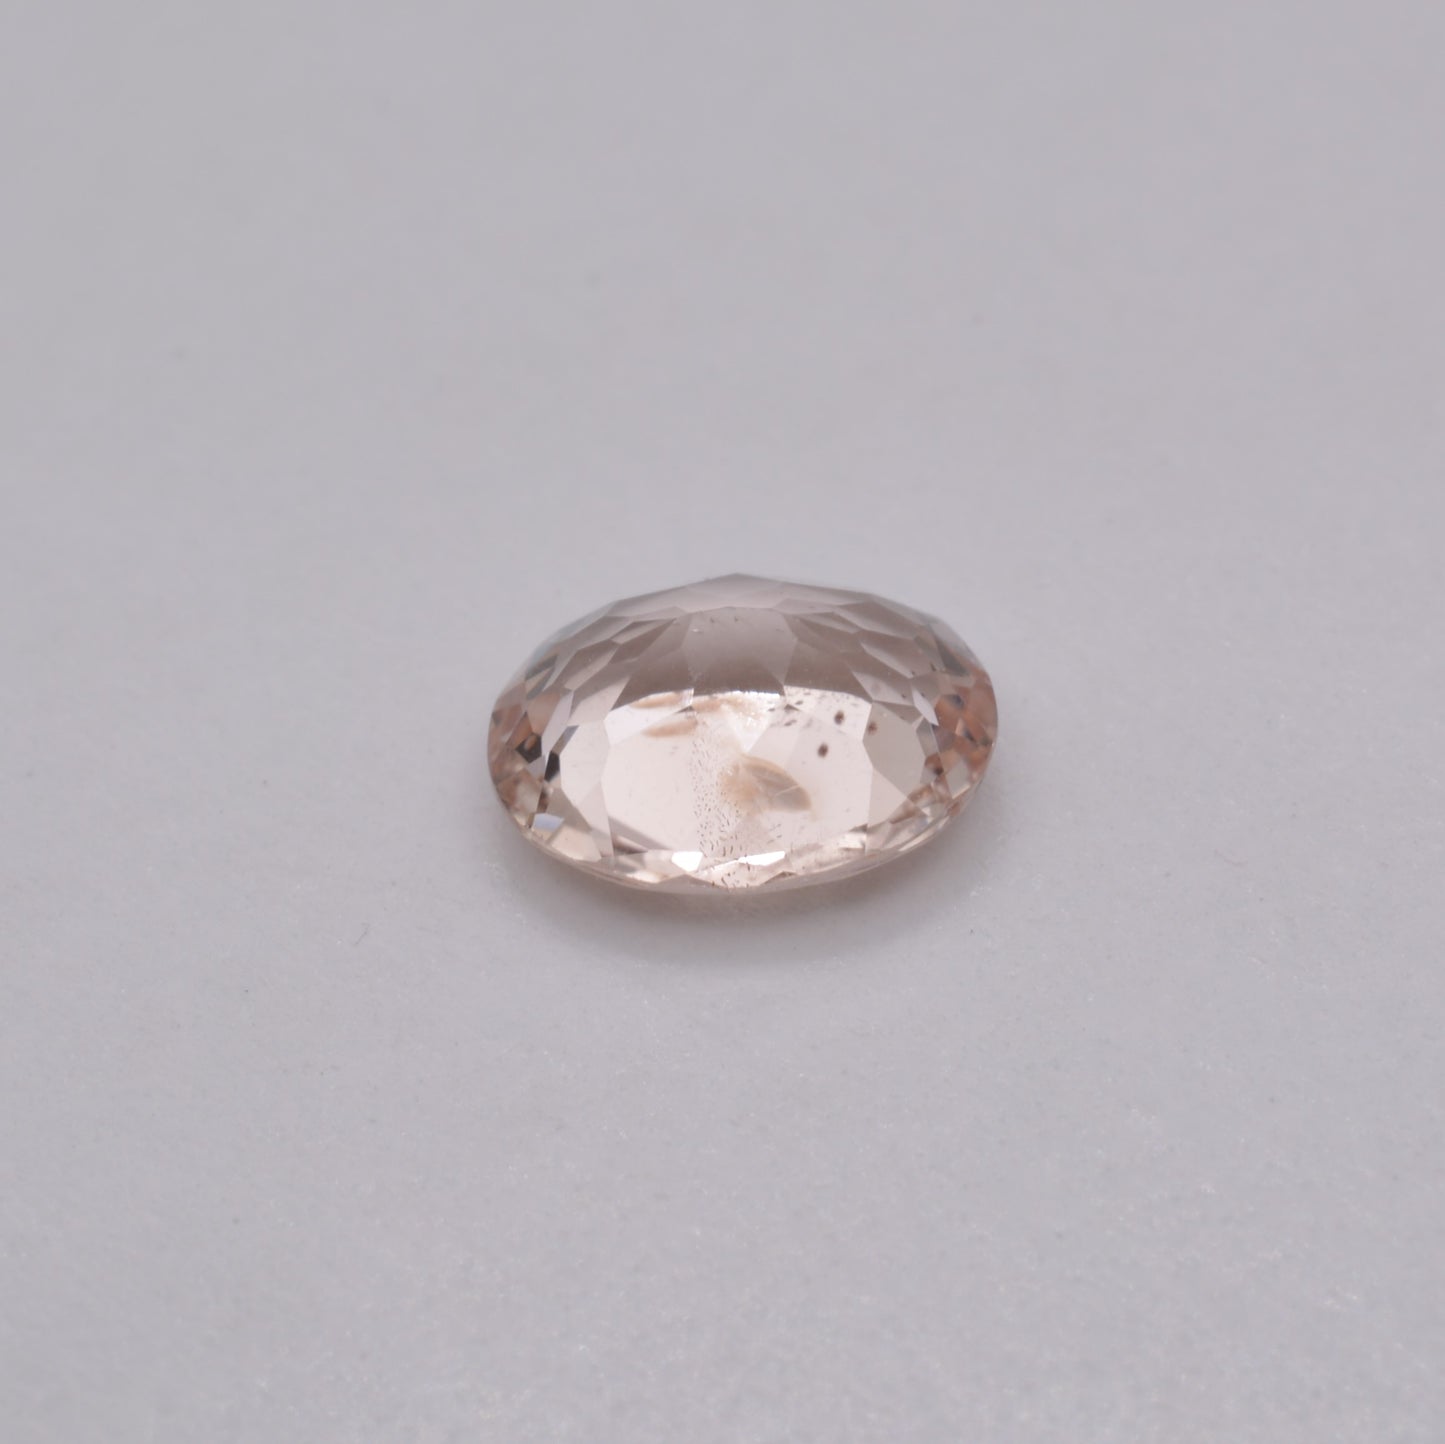 Morganite Ovale 1,70ct - pierre précieuse - gemme